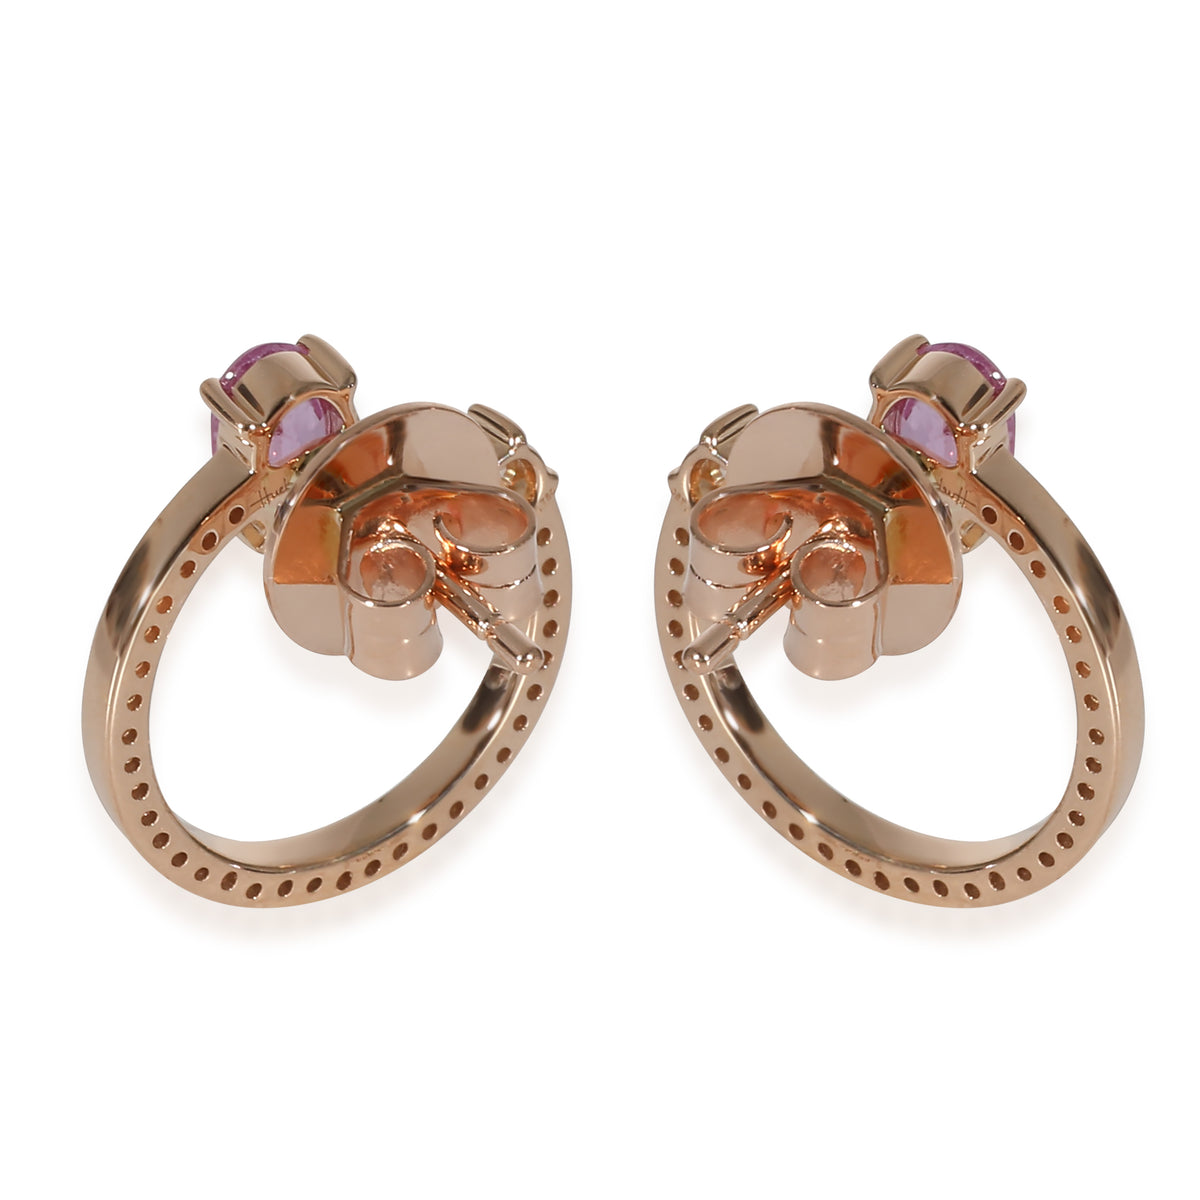 HUEB Spectrum Pink Sapphire & Diamond Earrings in 18k Rose Gold 0.39 CTW